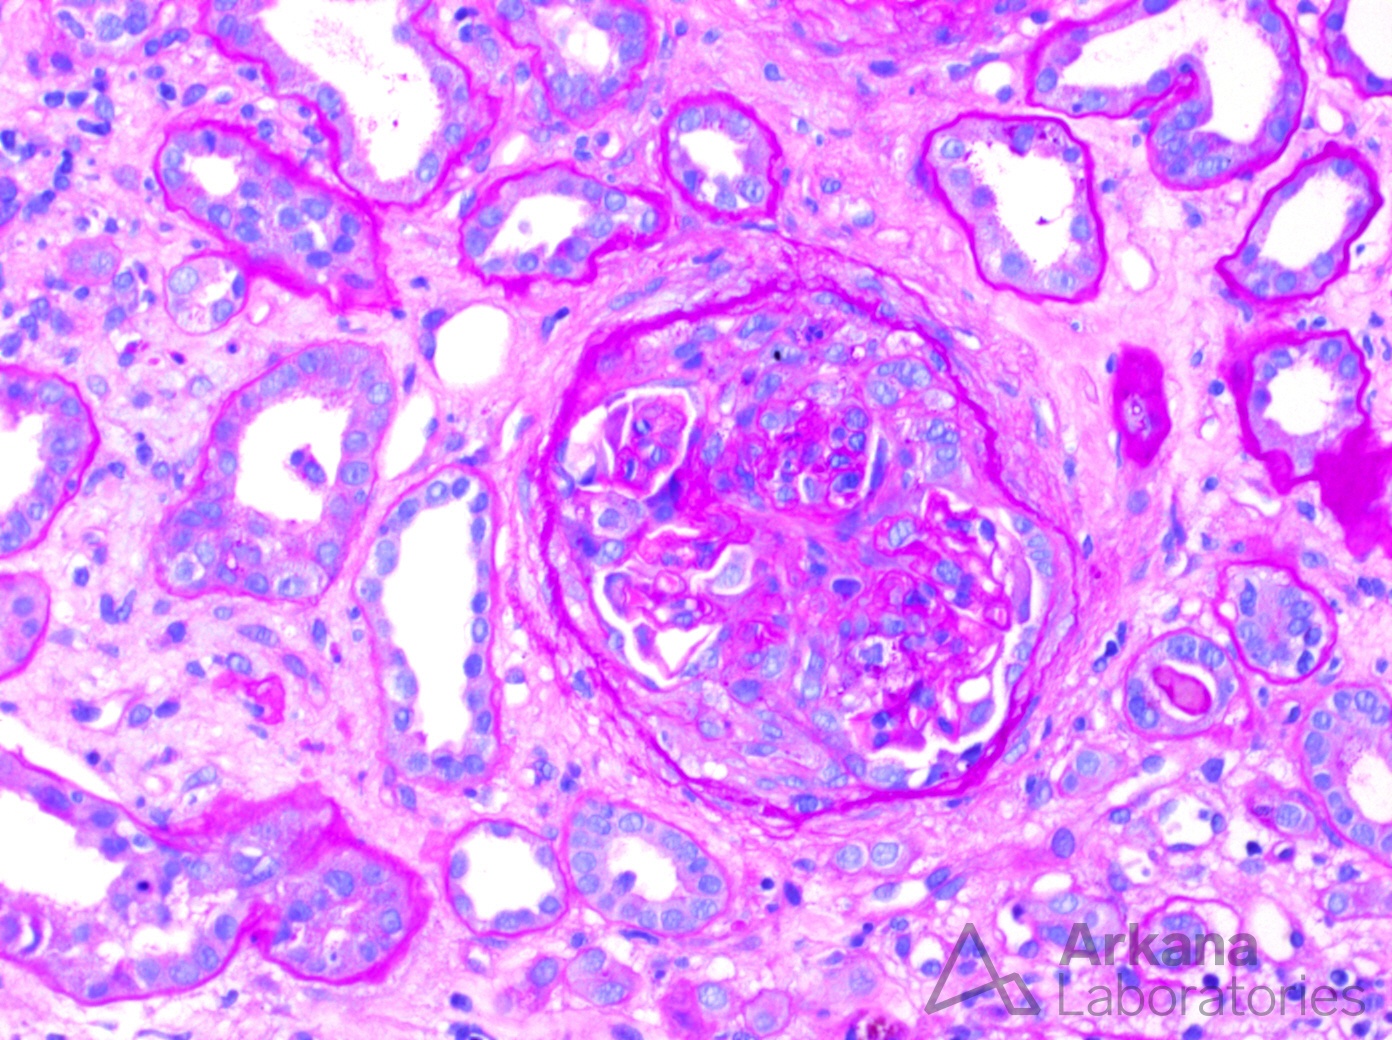 endocarditis-associated glomerulonephritis in renal biopsy at Arkana Laboratories